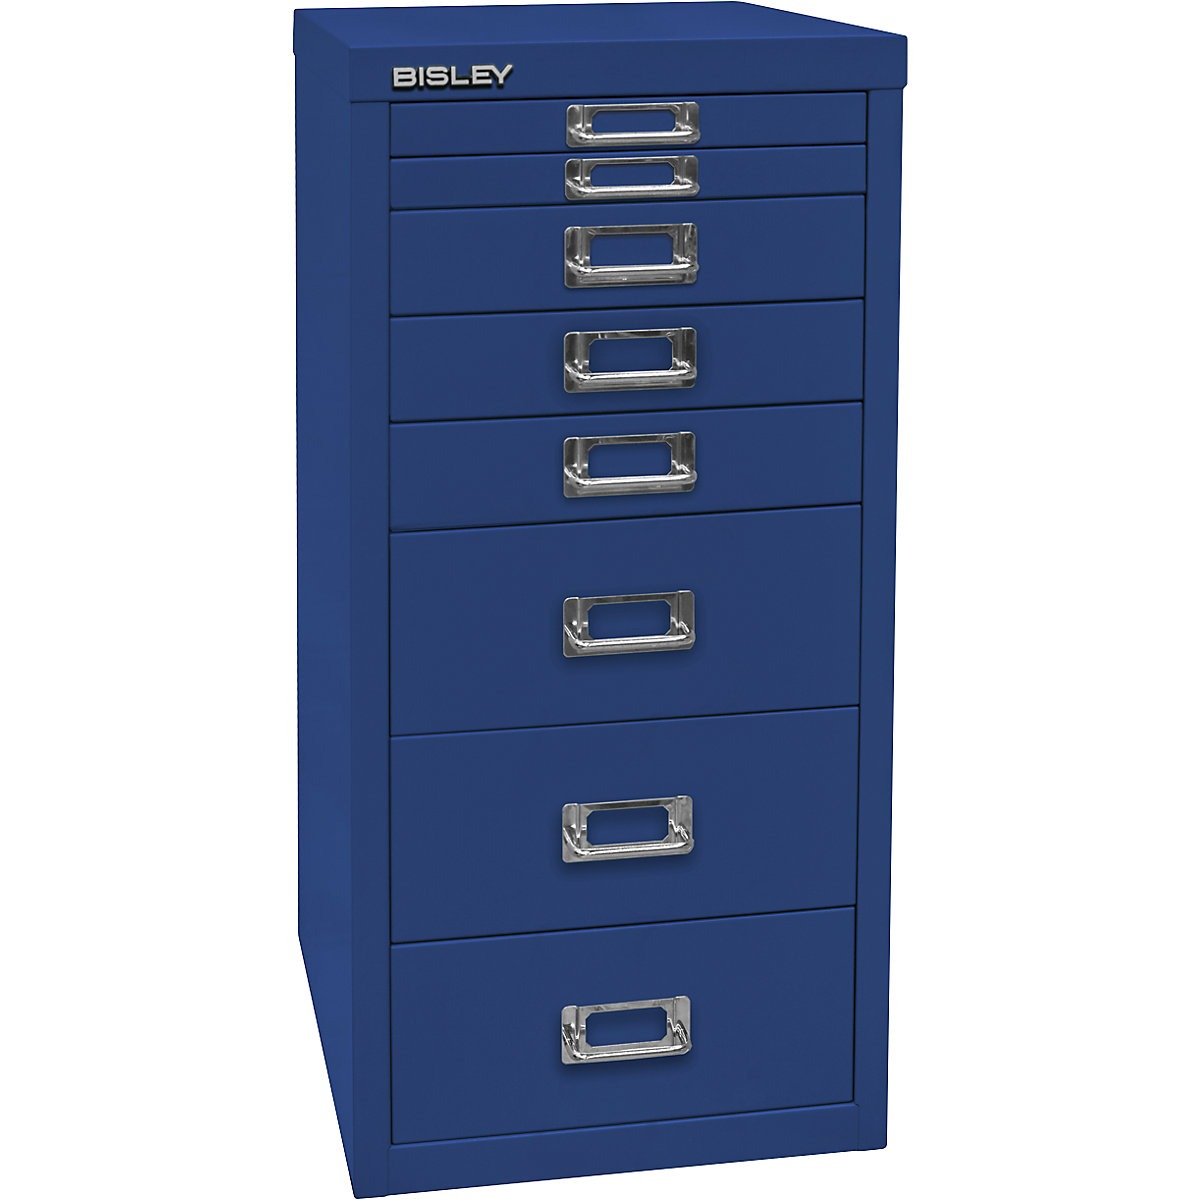 MultiDrawer™ 29 series – BISLEY, A4, 8 drawers, oxford blue-3